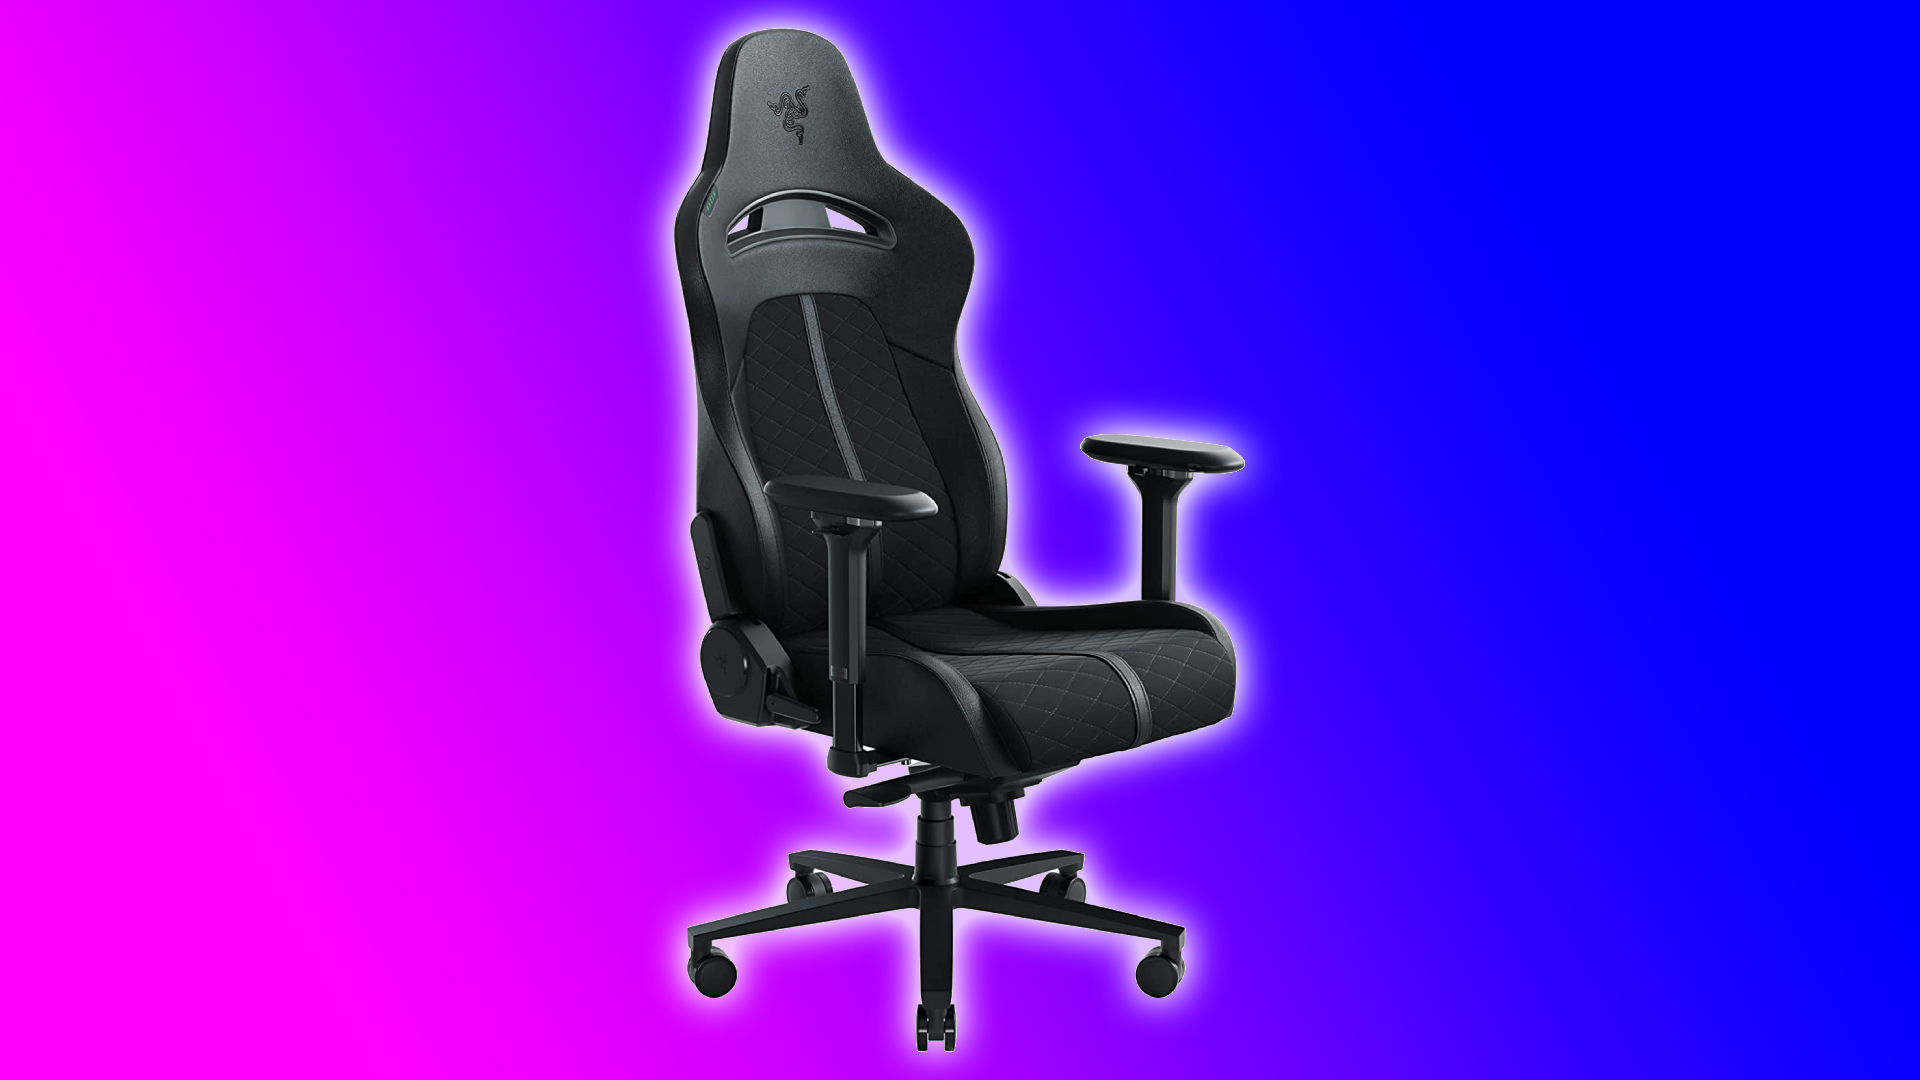 Pick up the Razer Enki Gaming Chair for $50 less on Amazon